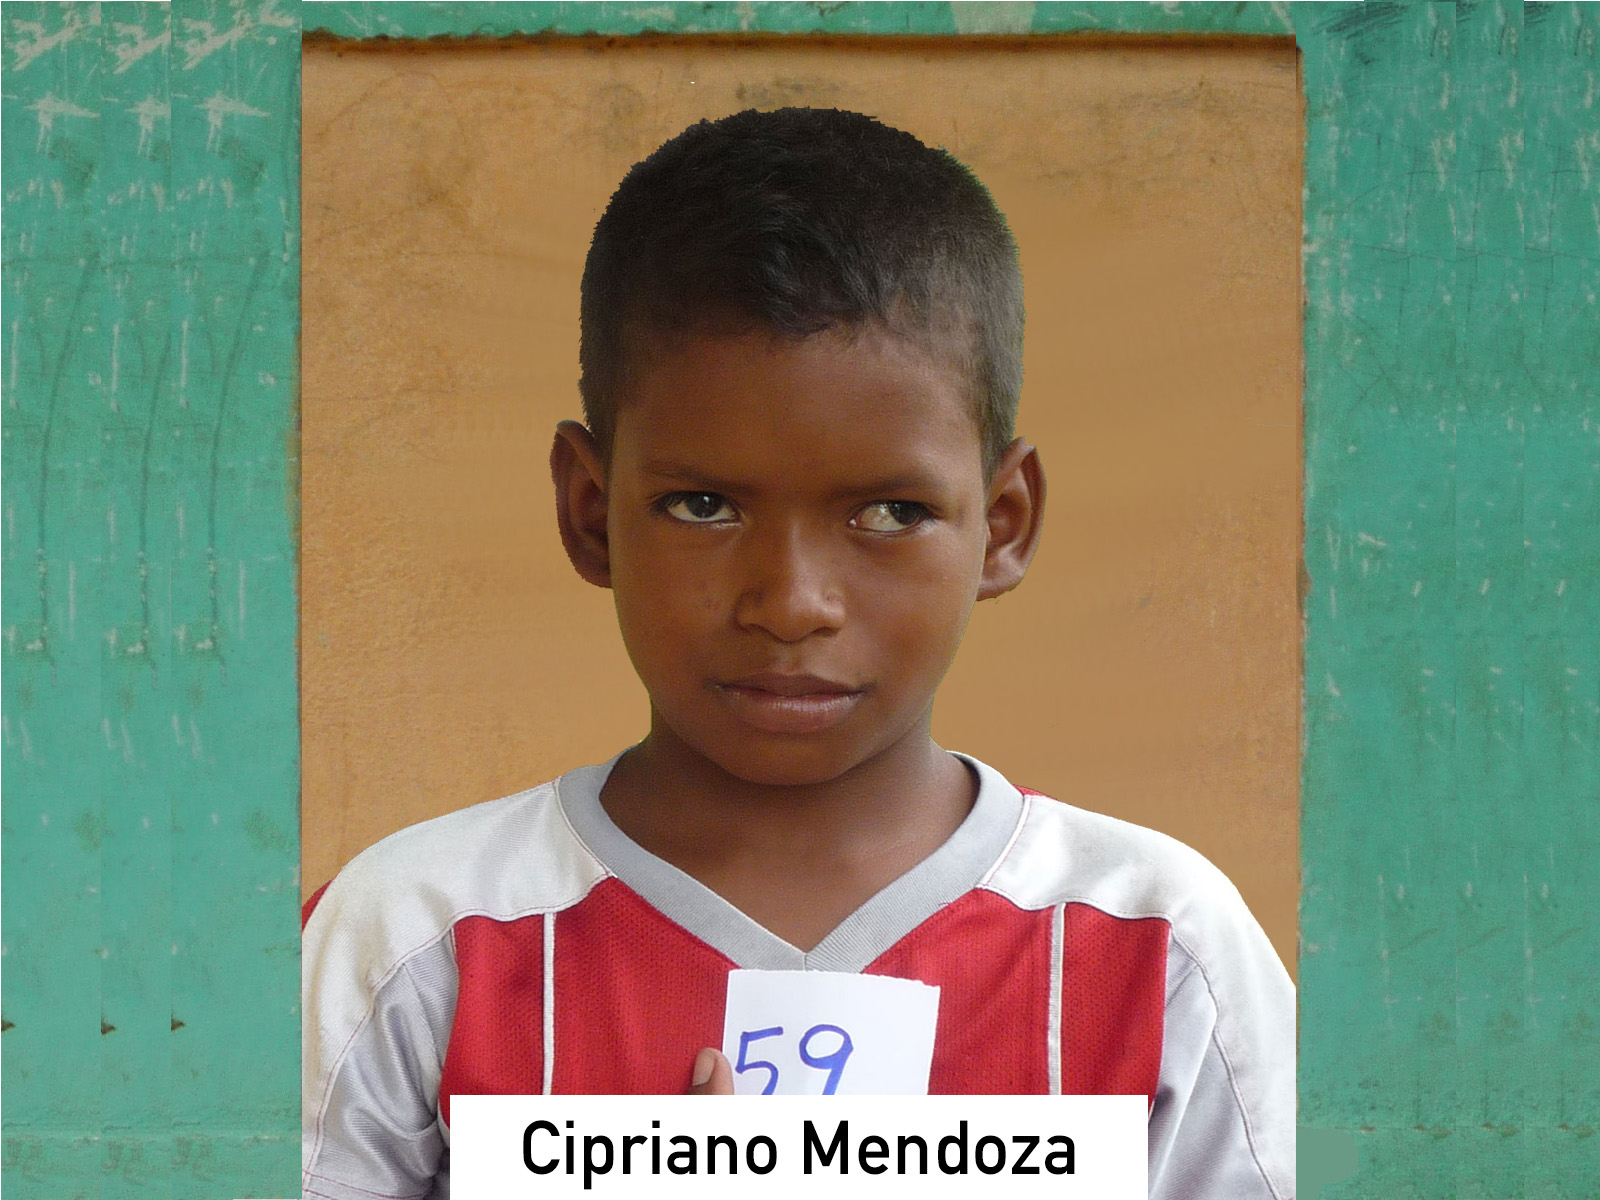 059 - Cipriano Mendoza.jpg